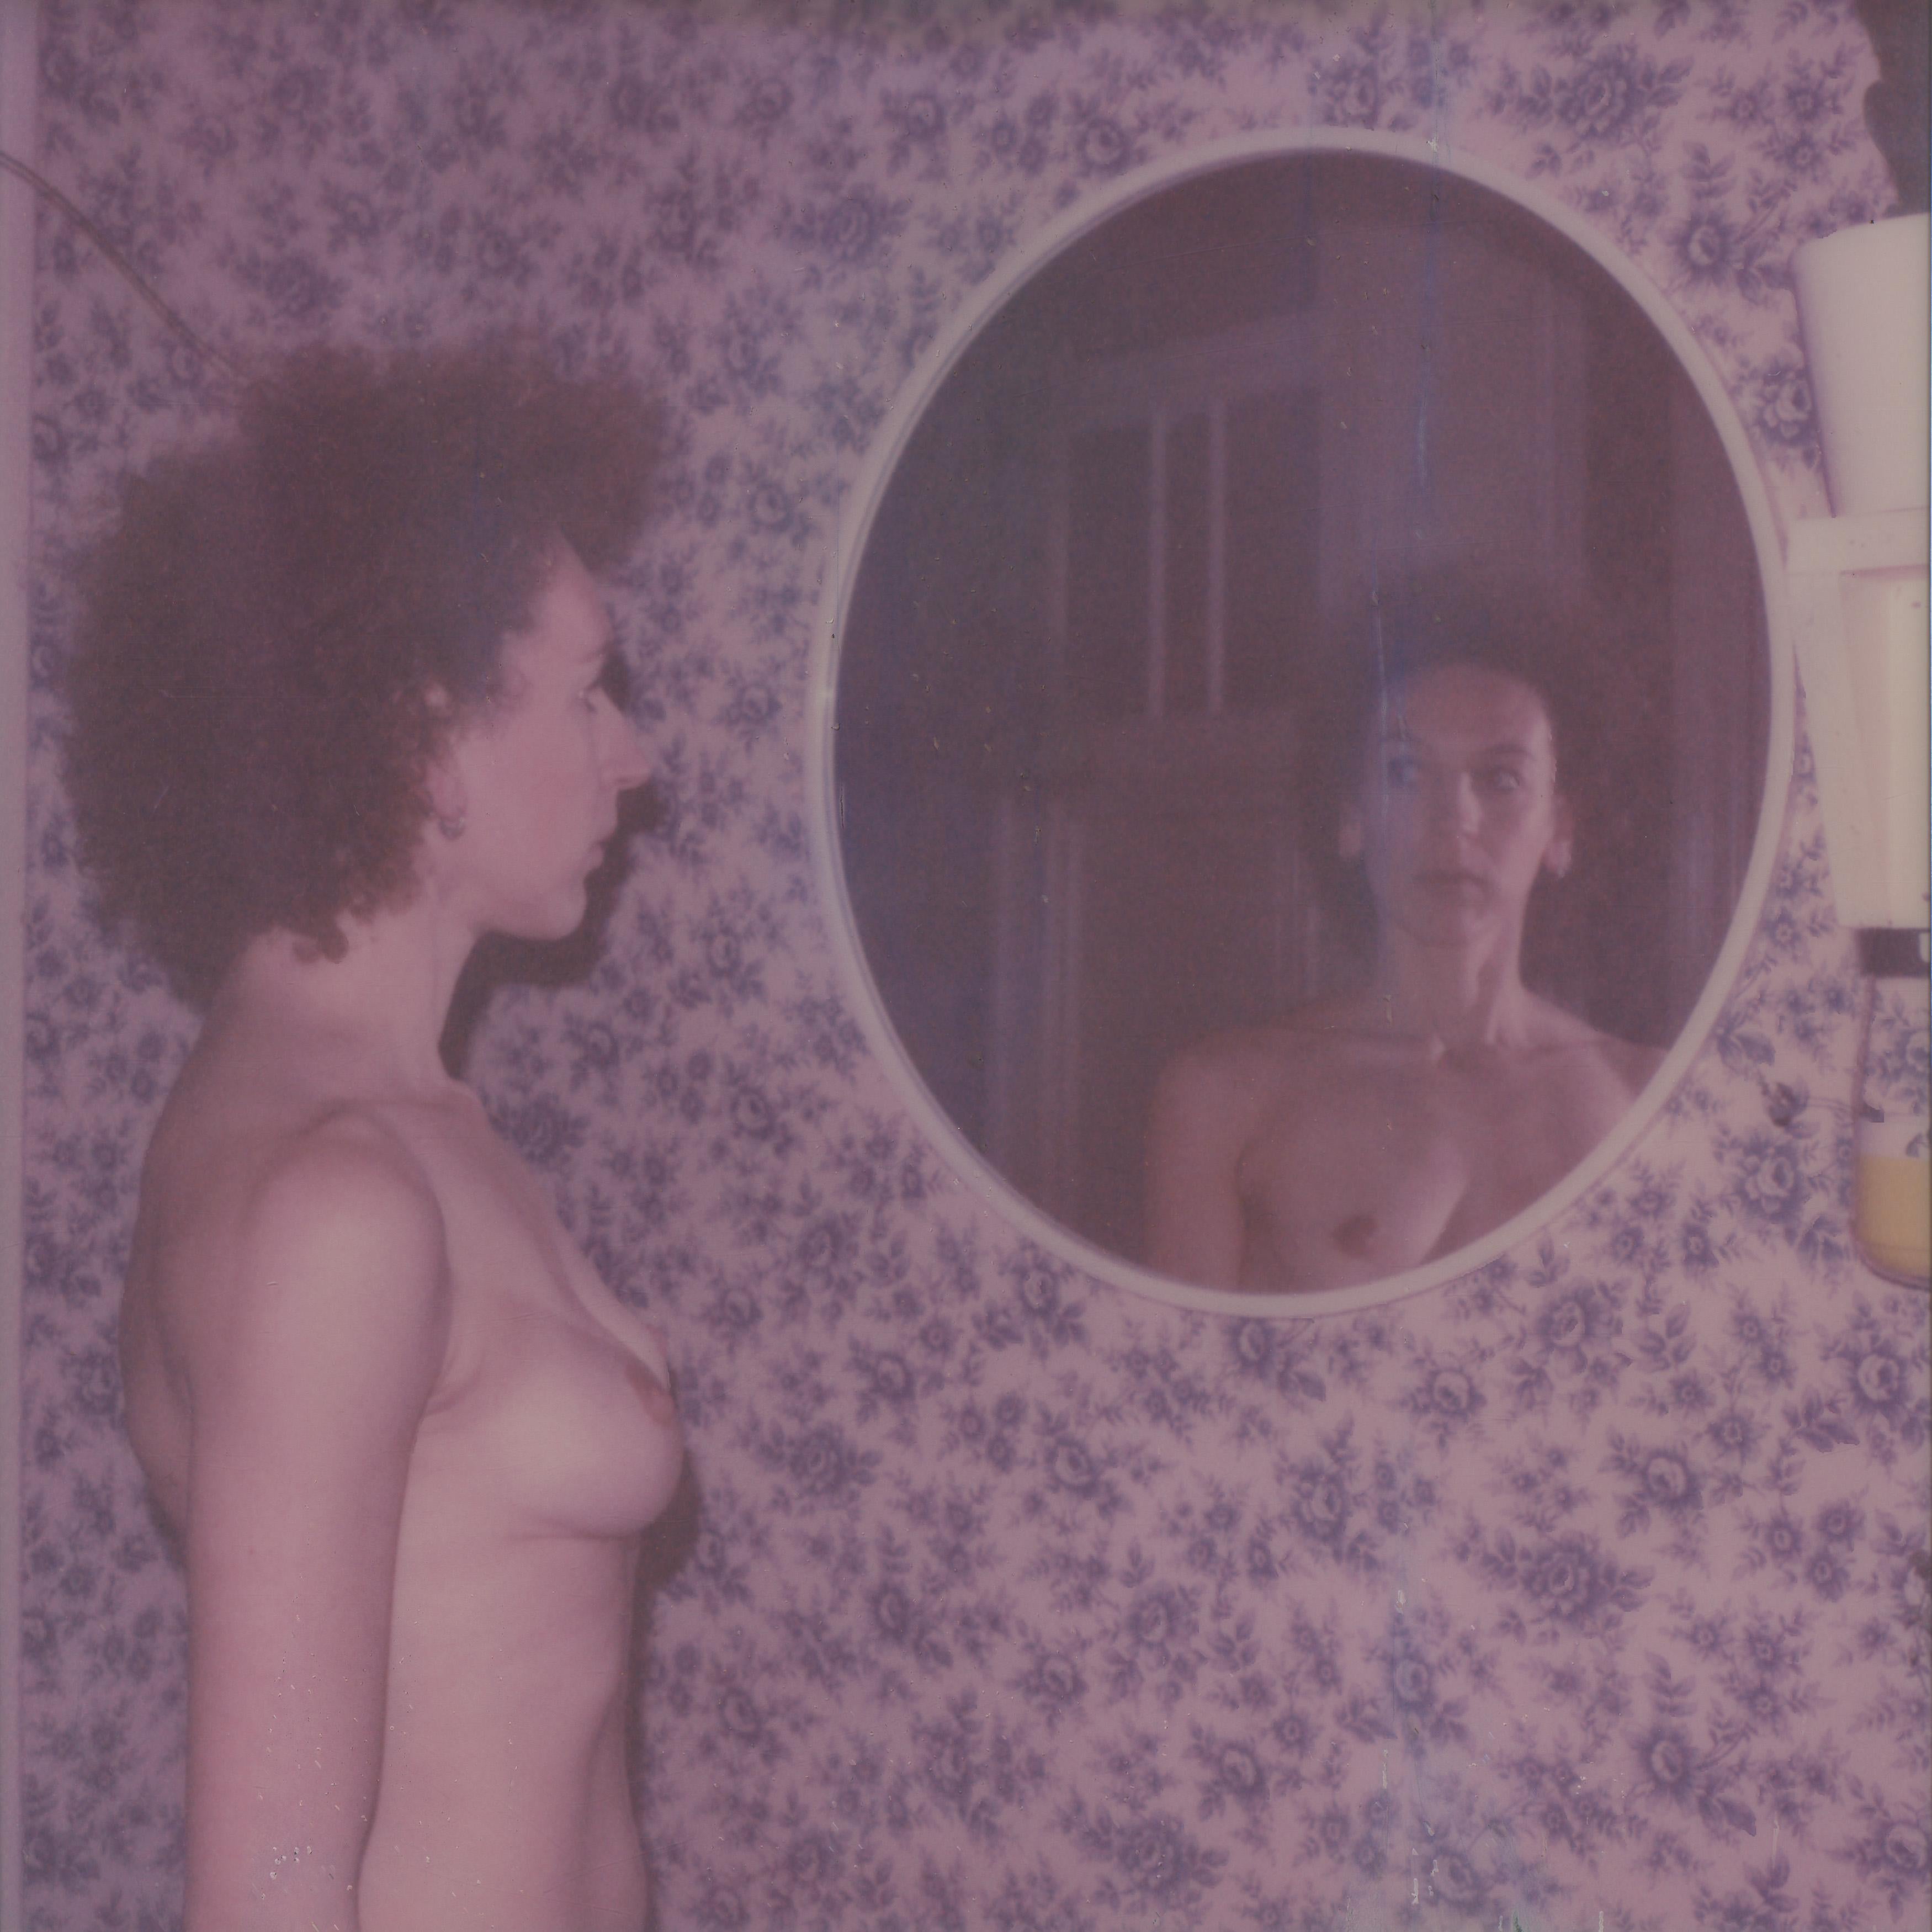 Hindsigh - Contemporary, Nude, Women, Polaroid, 21st Century